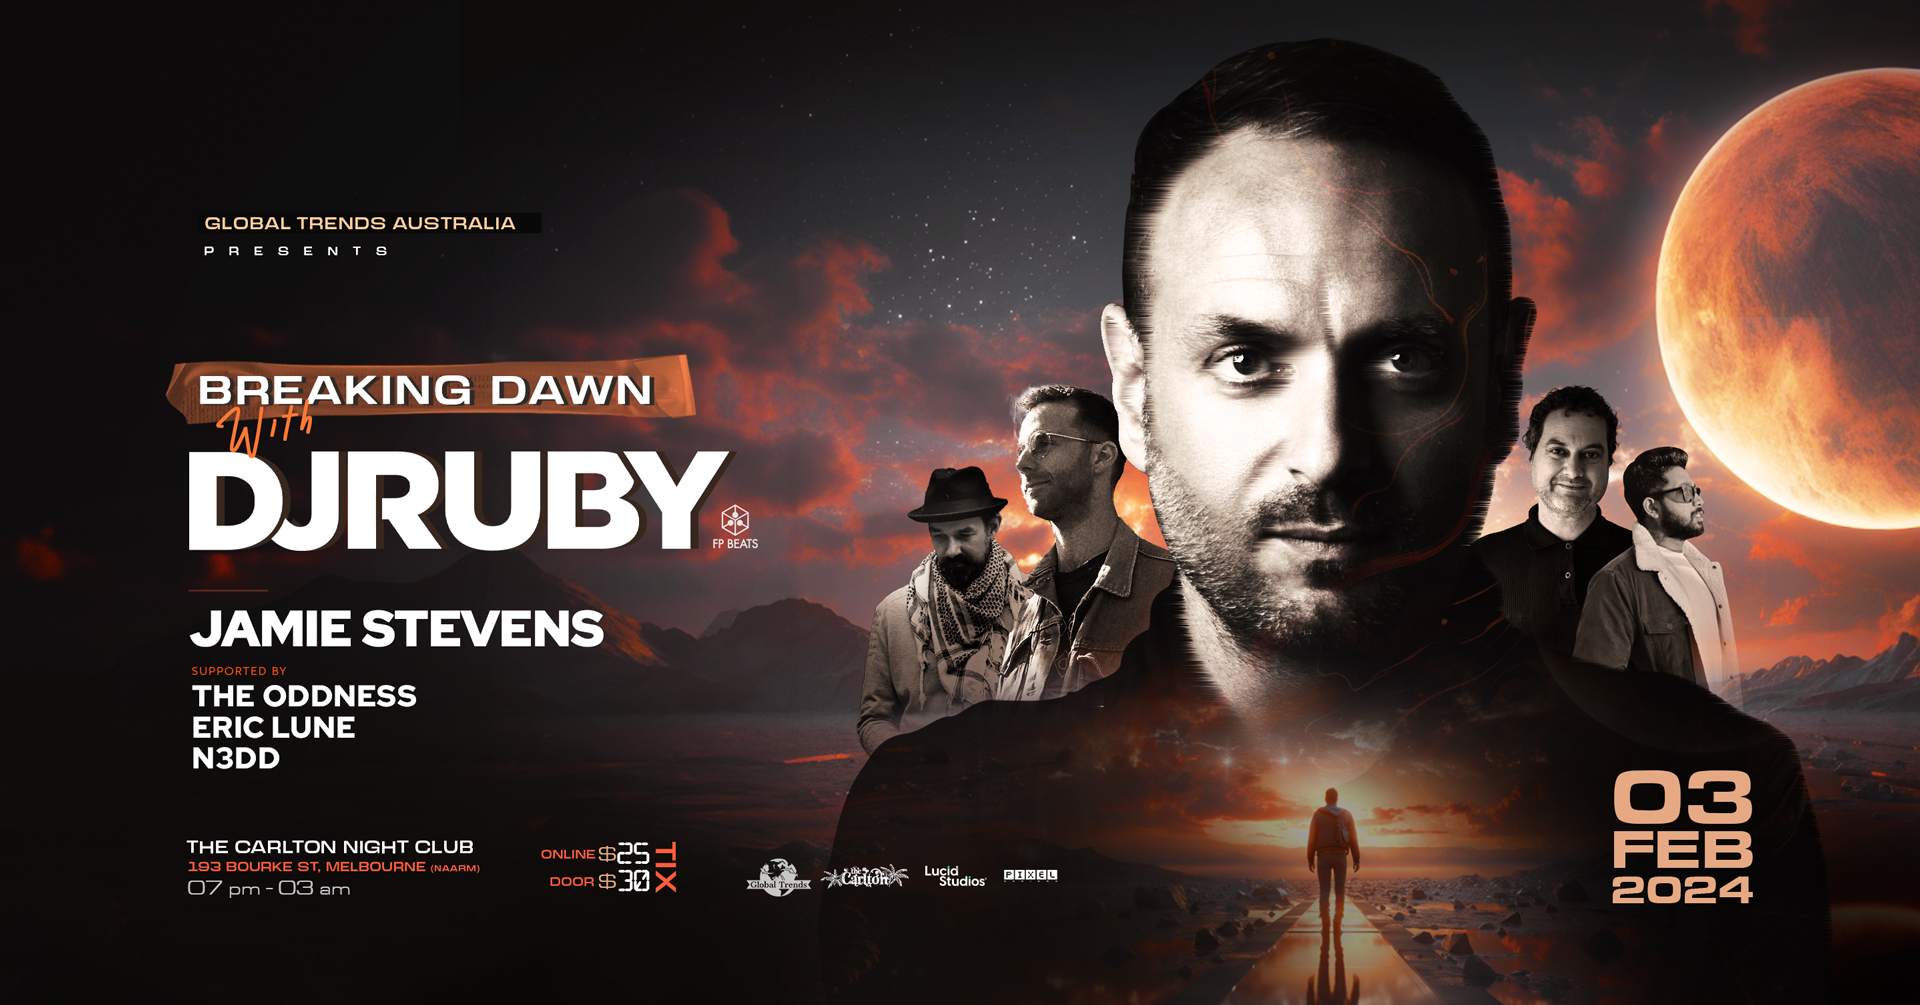 GLOBAL TRENDS AUSTRALIA pres: BREAKING DAWN with DJ Ruby & Jamie Stevens - フライヤー裏